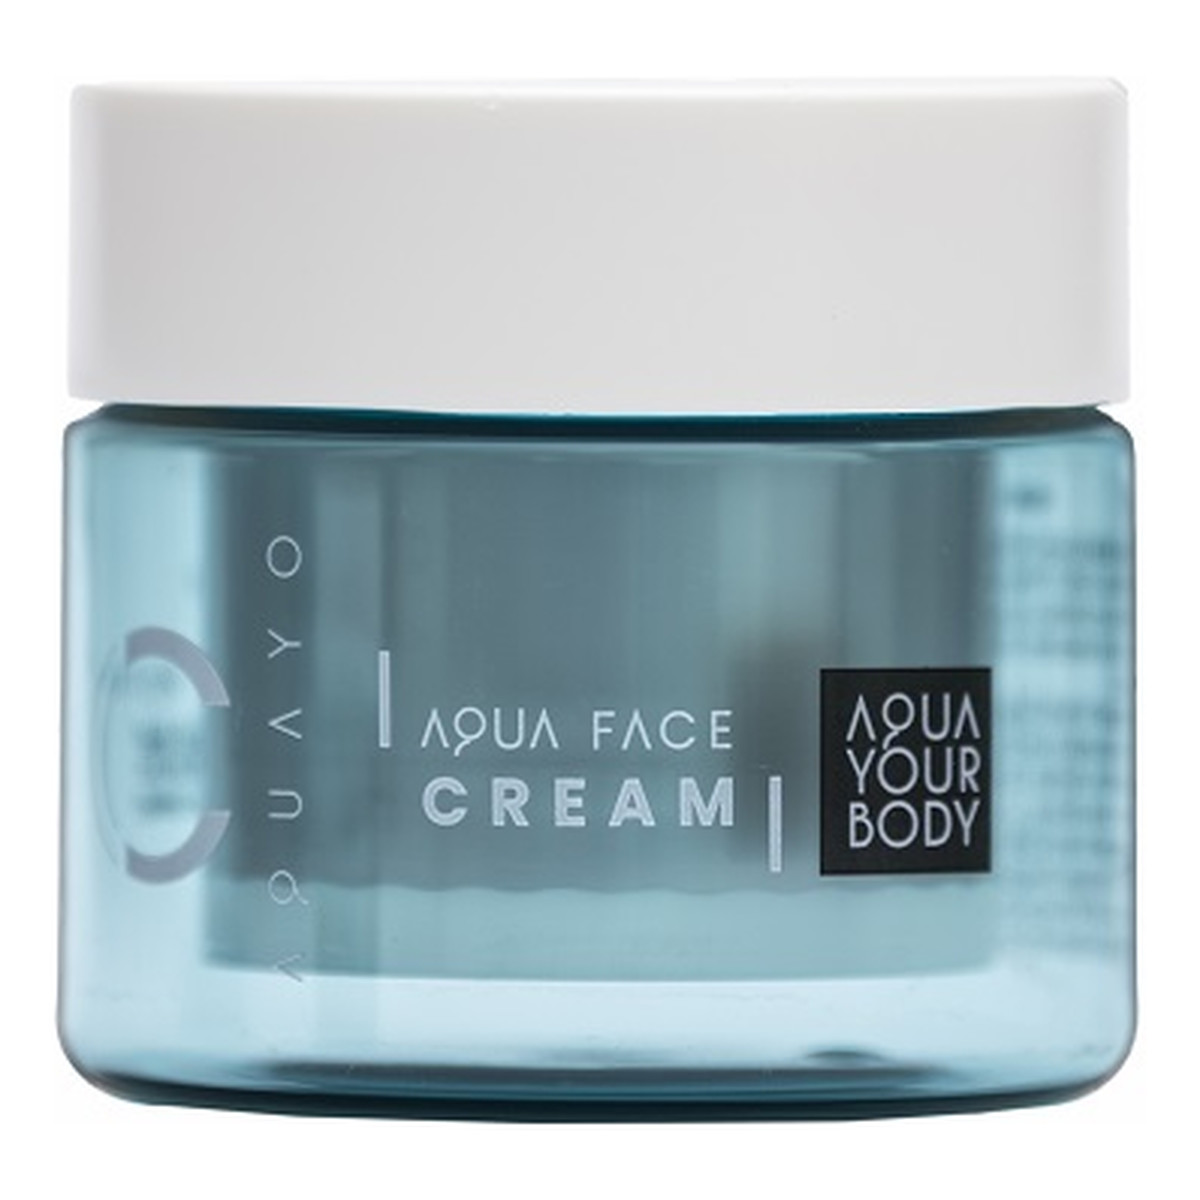 Aquayo Aqua Face Cream krem na dzień 50ml